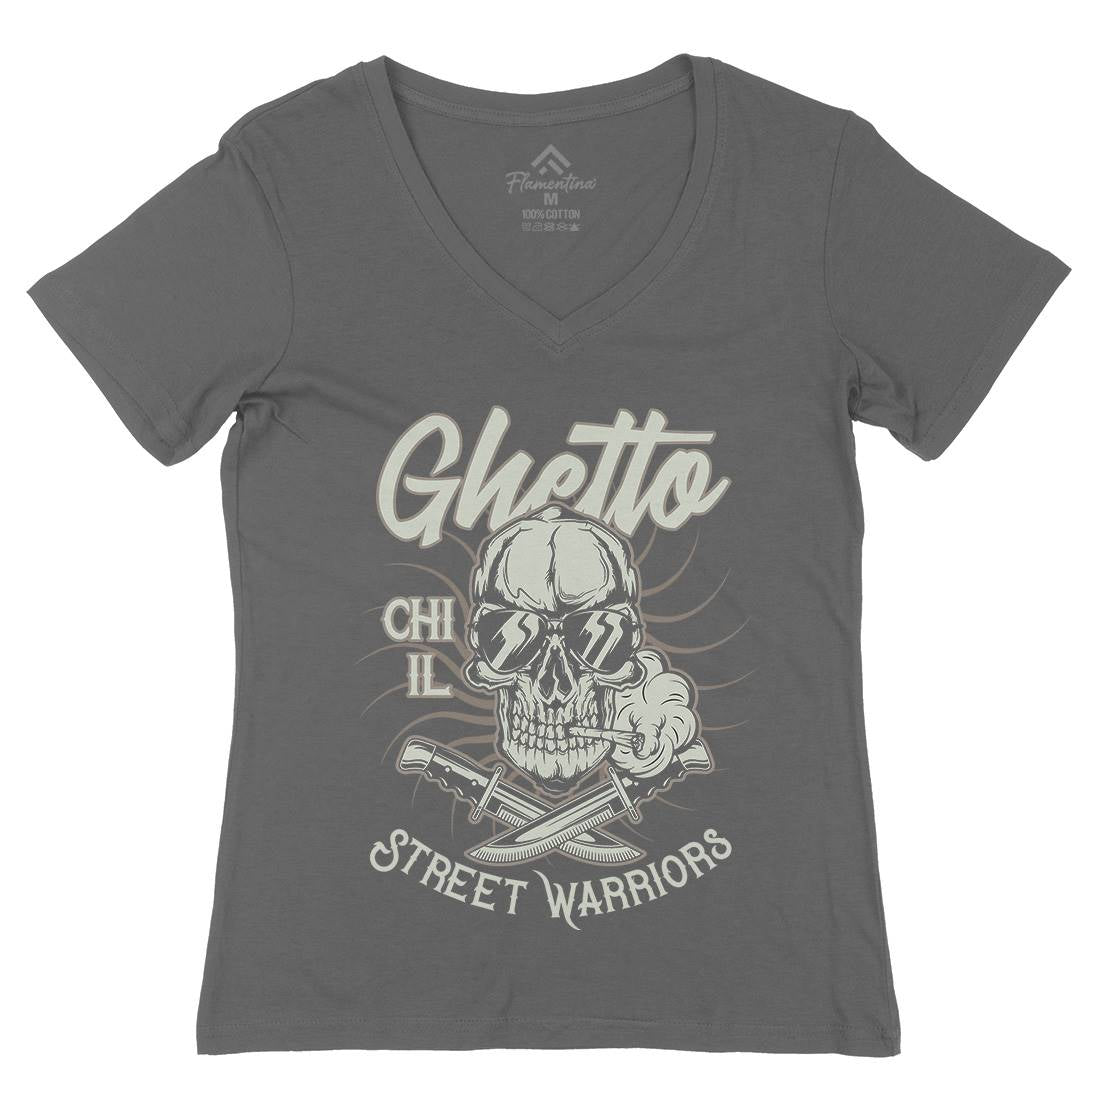 Ghetto Street Warriors Womens Organic V-Neck T-Shirt Retro D937